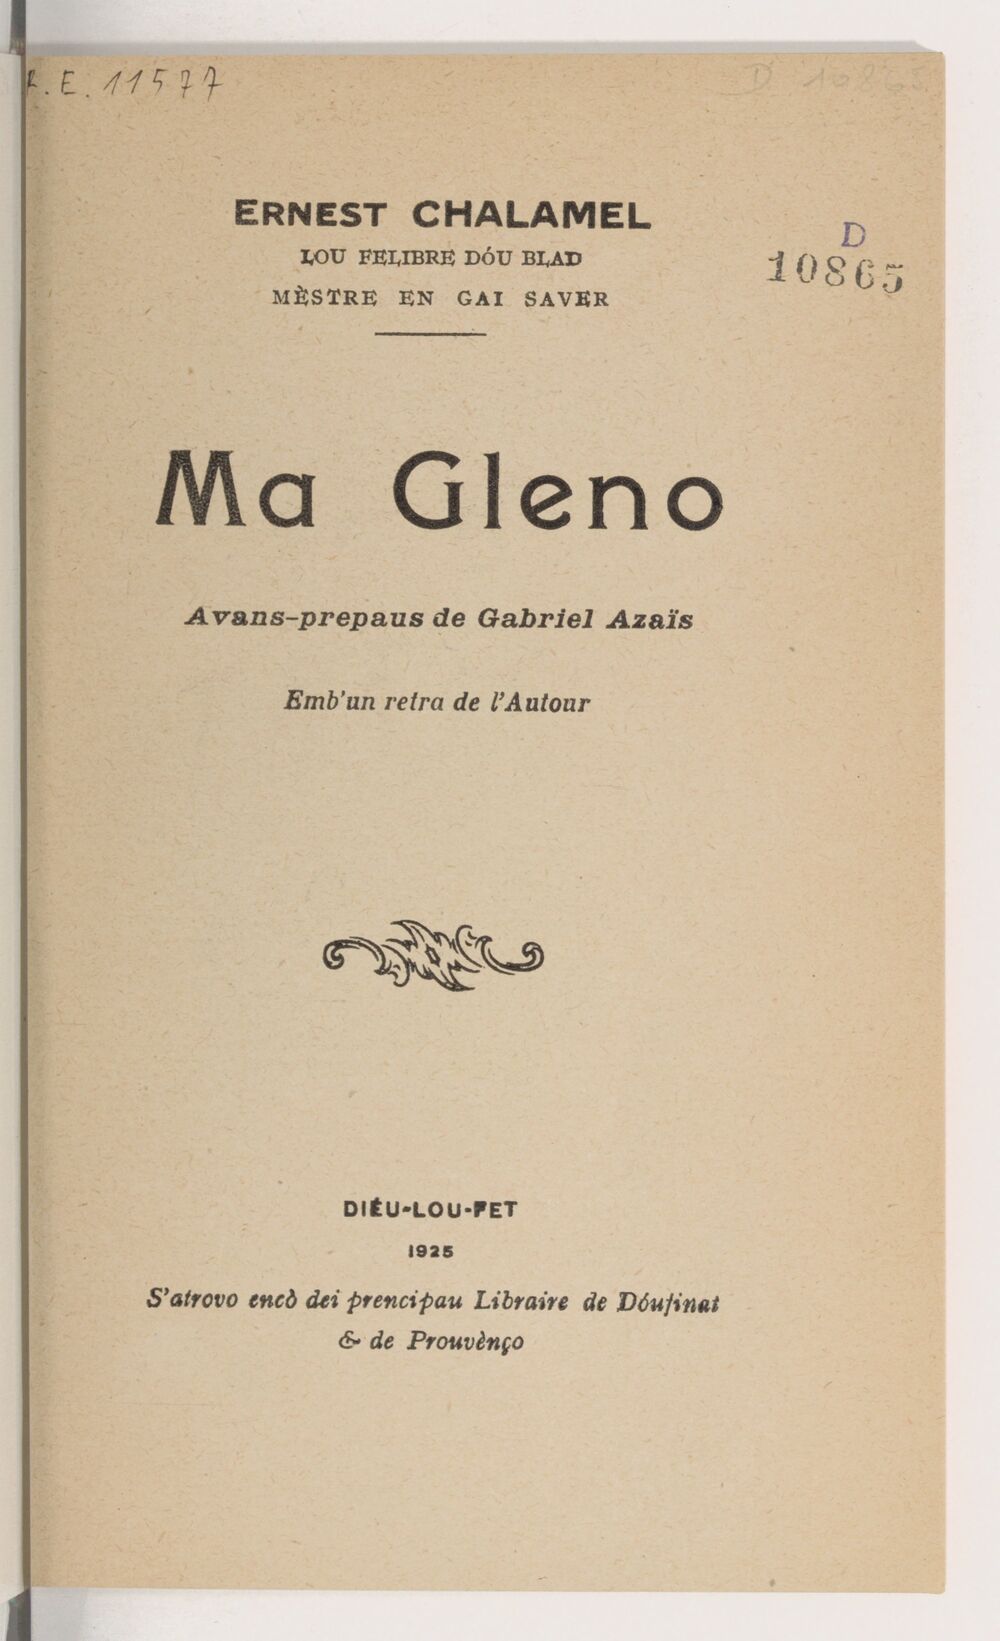 Ma Gleno / Ernest Chalamel ; avans-prepaus de Gabriel Azaïs